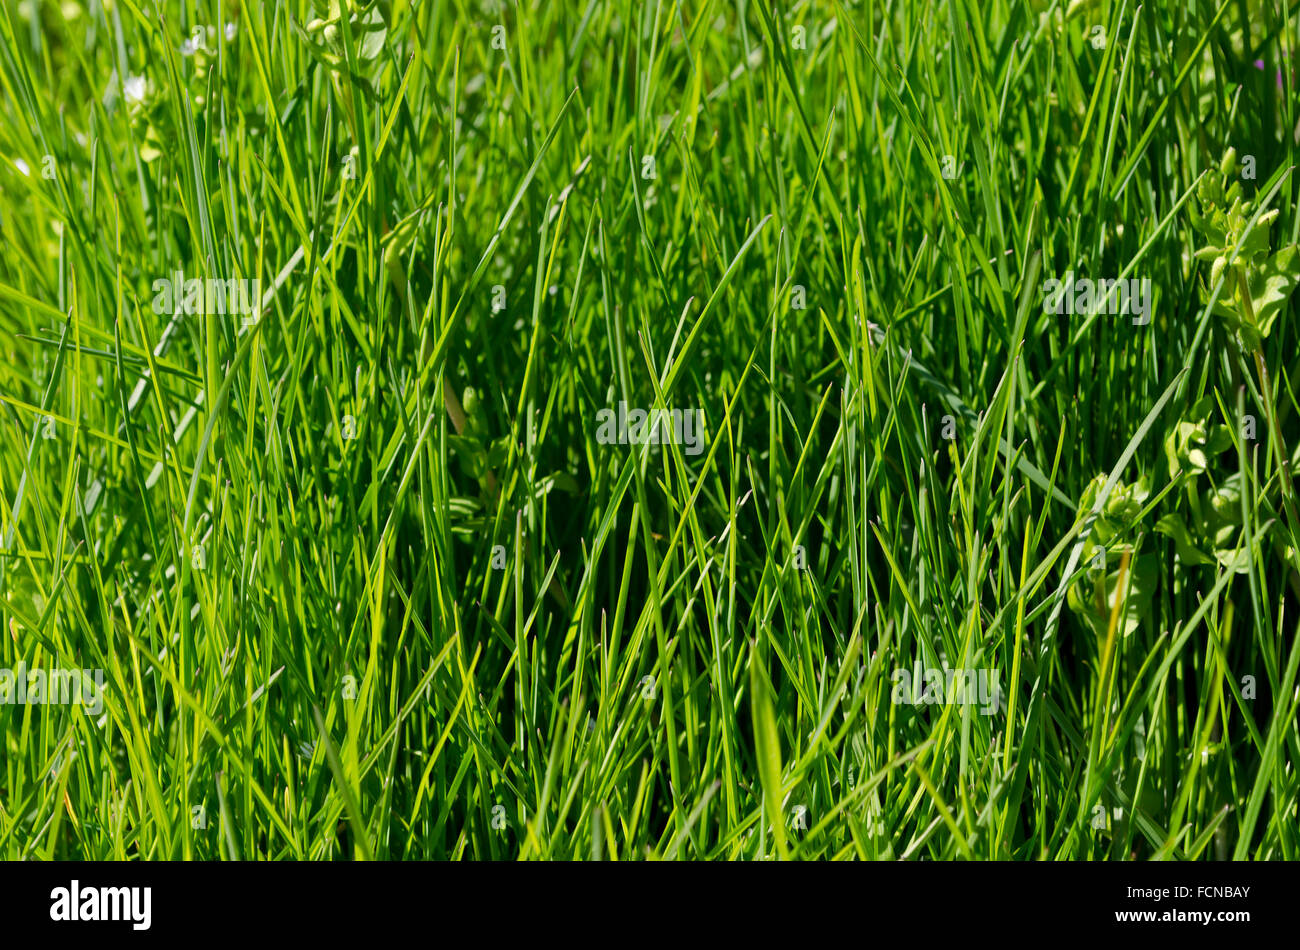 Vivace verde erba close-up con DOF focus Foto Stock